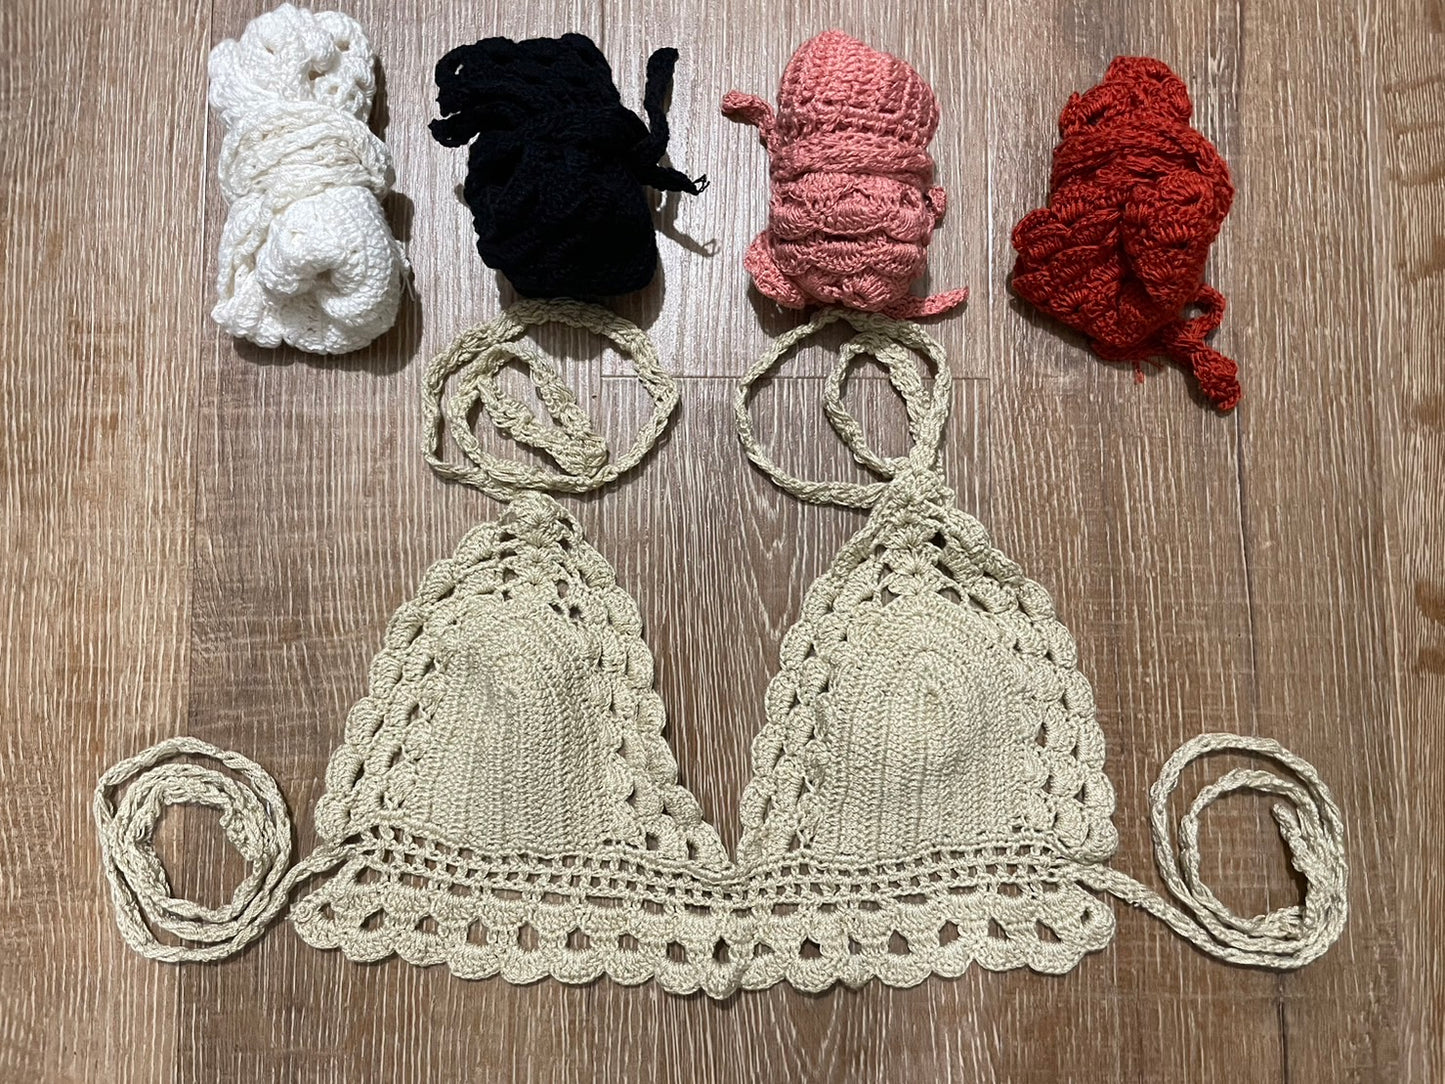 Crochet Bikini Top - Size XS